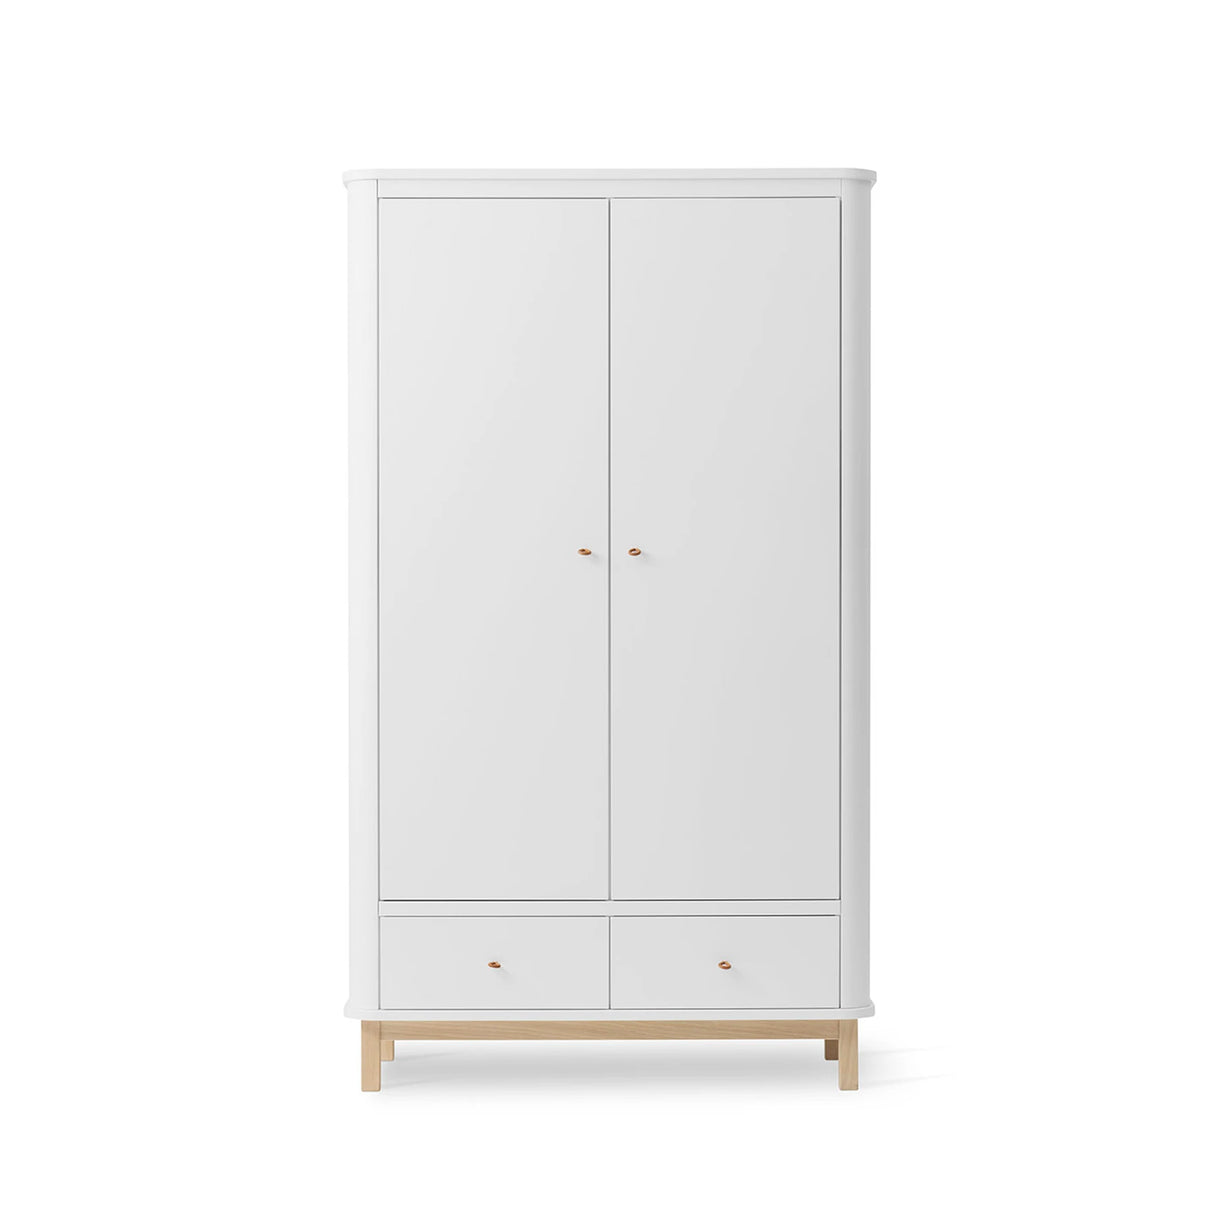 Oliver Furniture Wood Wardrobe 2 Doors in White/Oak - Little Snoozes